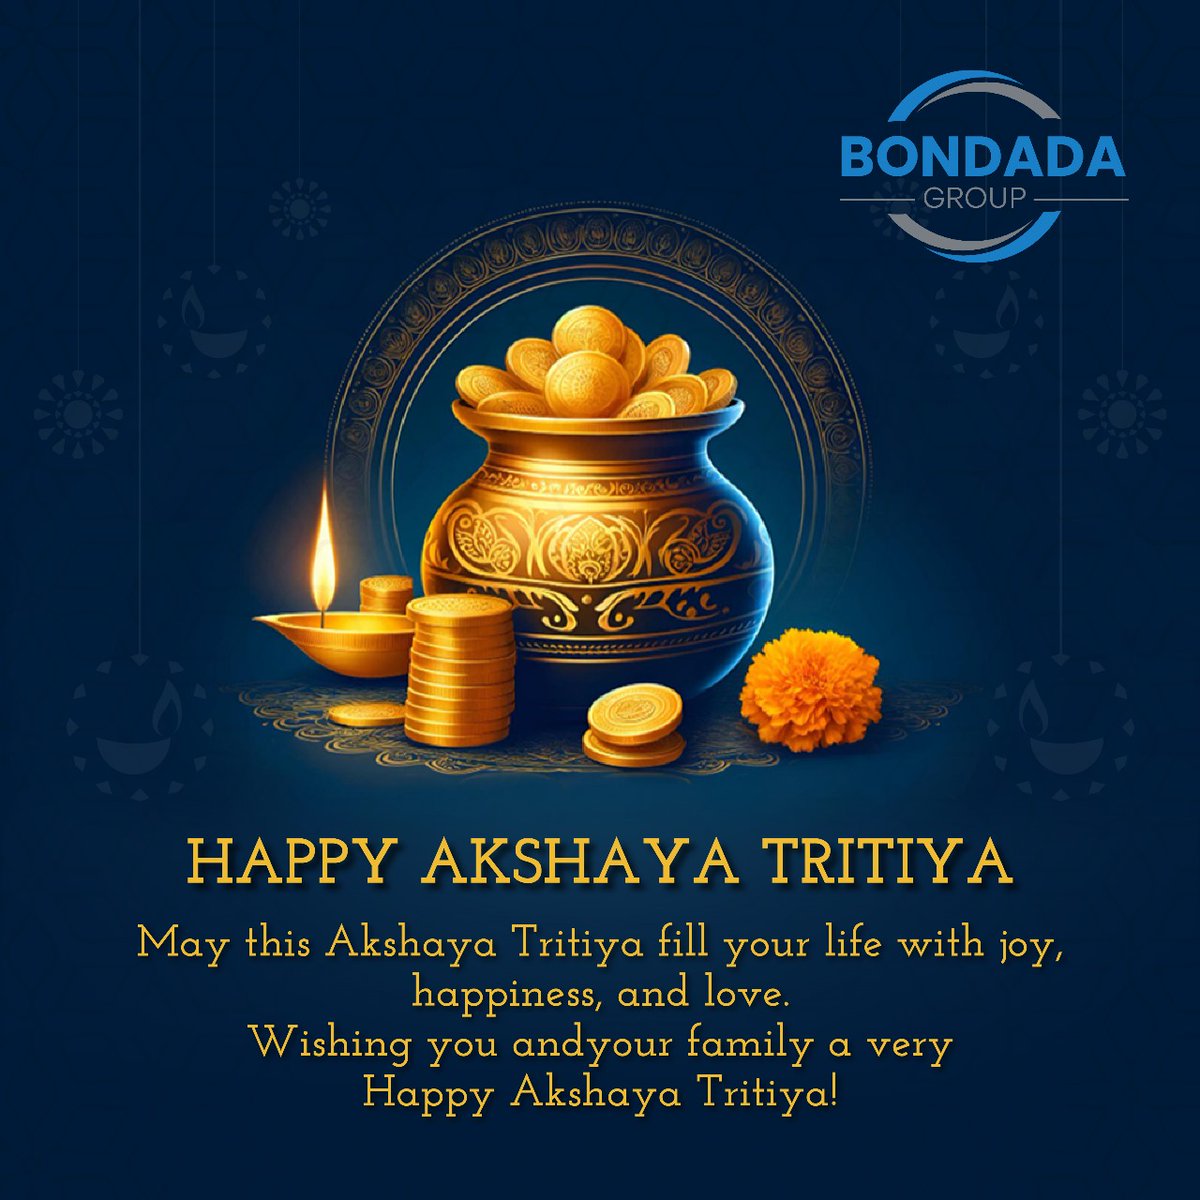 Happy Akshaya Tritiya!🌟 May this auspicious day be filled with endless joy, love, and prosperity for you and your loved ones! ✨

#AkshayaTritiya #Prosperity #Joy #Love #Blessings #FestivalGreetings #BondadaGroup